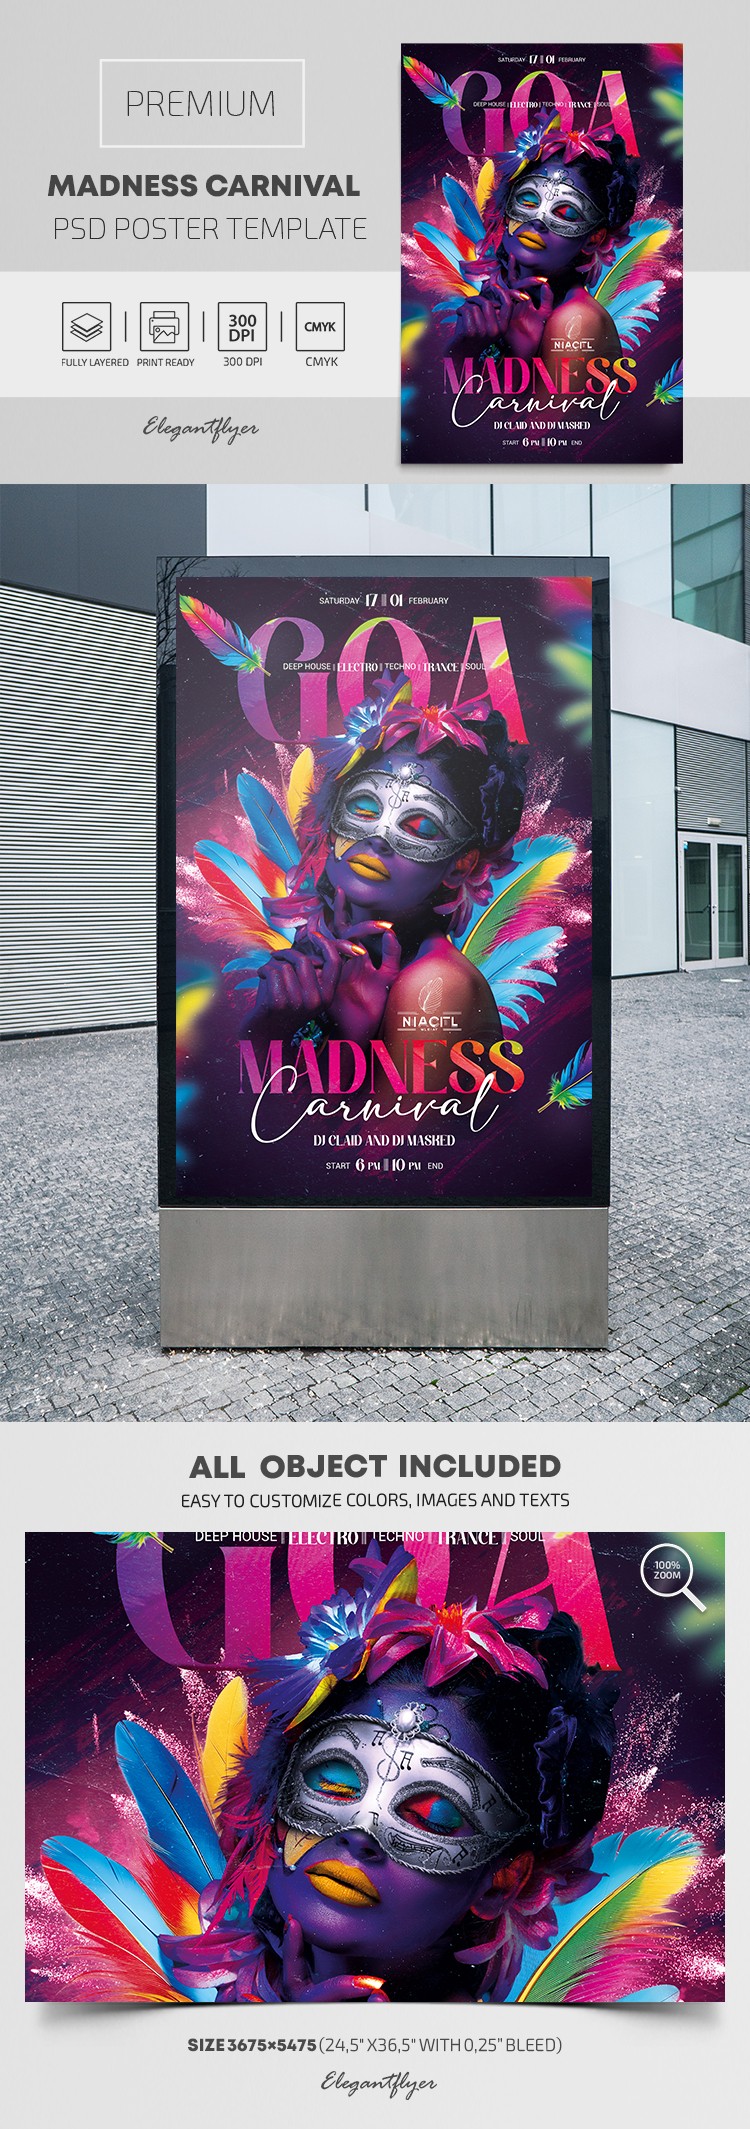 GOA madness Carnival by ElegantFlyer